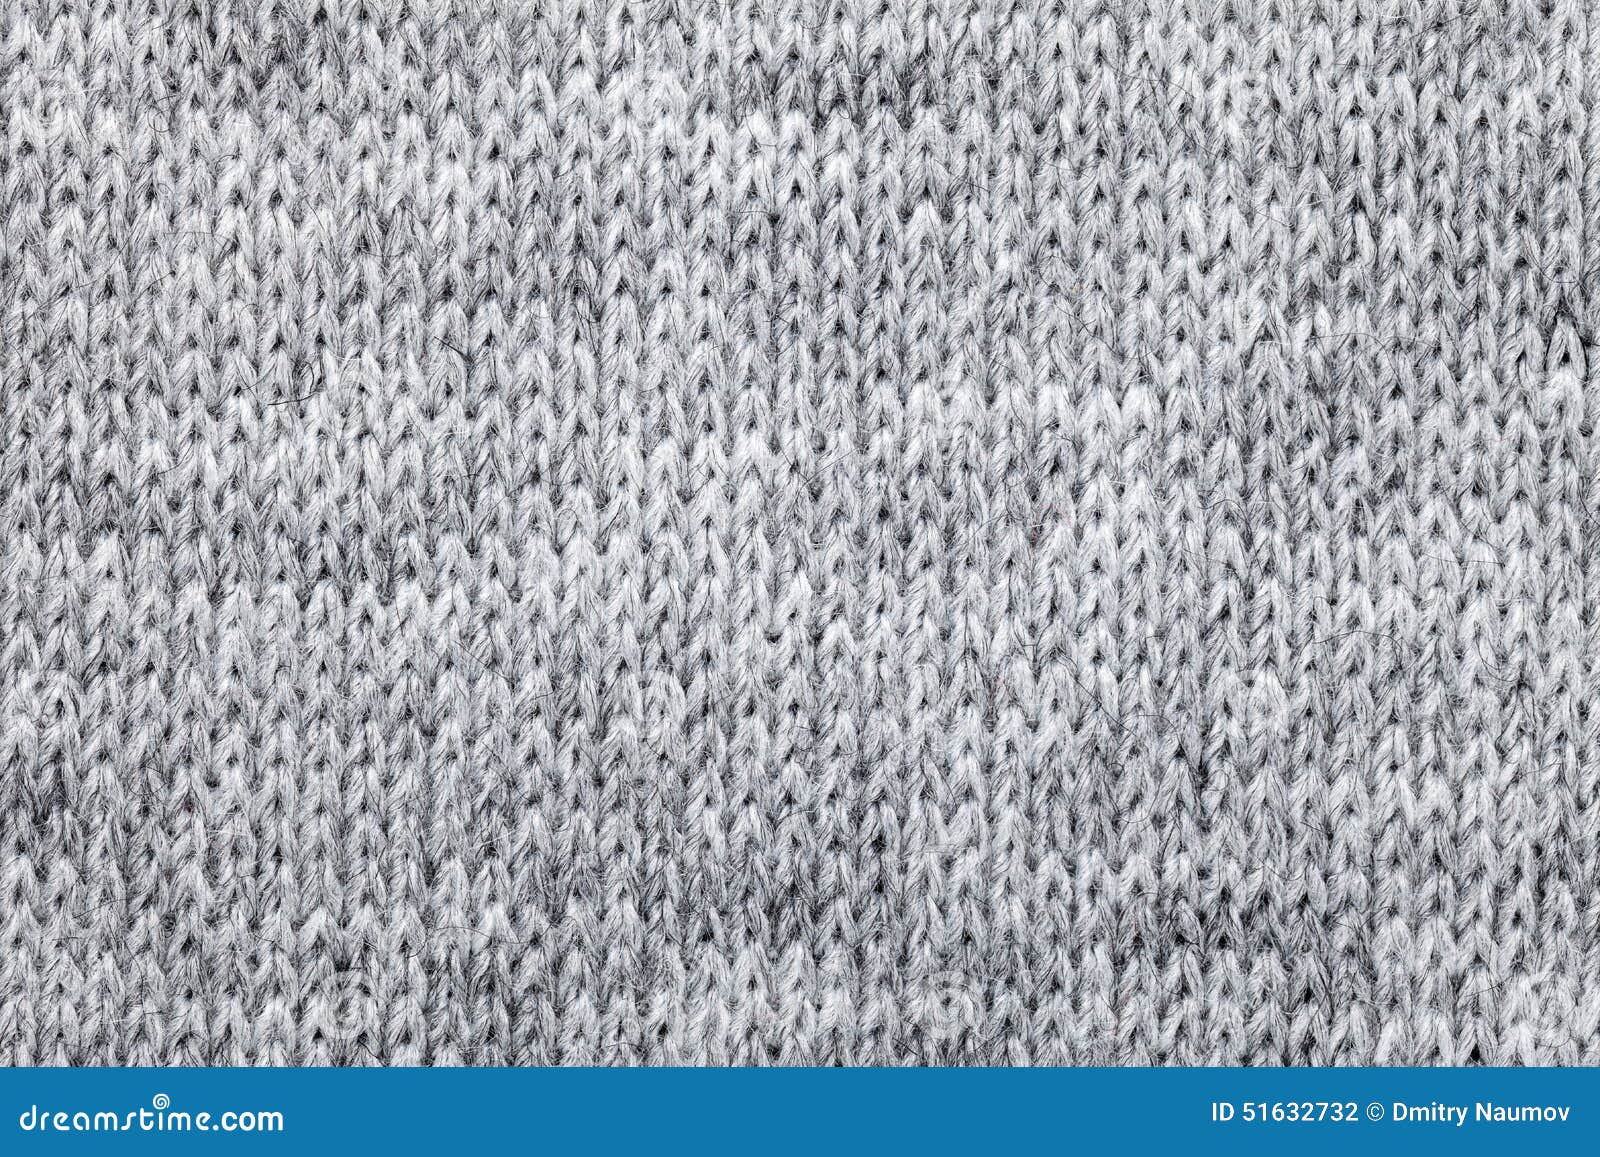 Knitted Melange Textile Pattern Stock Photo - Image of knitting 